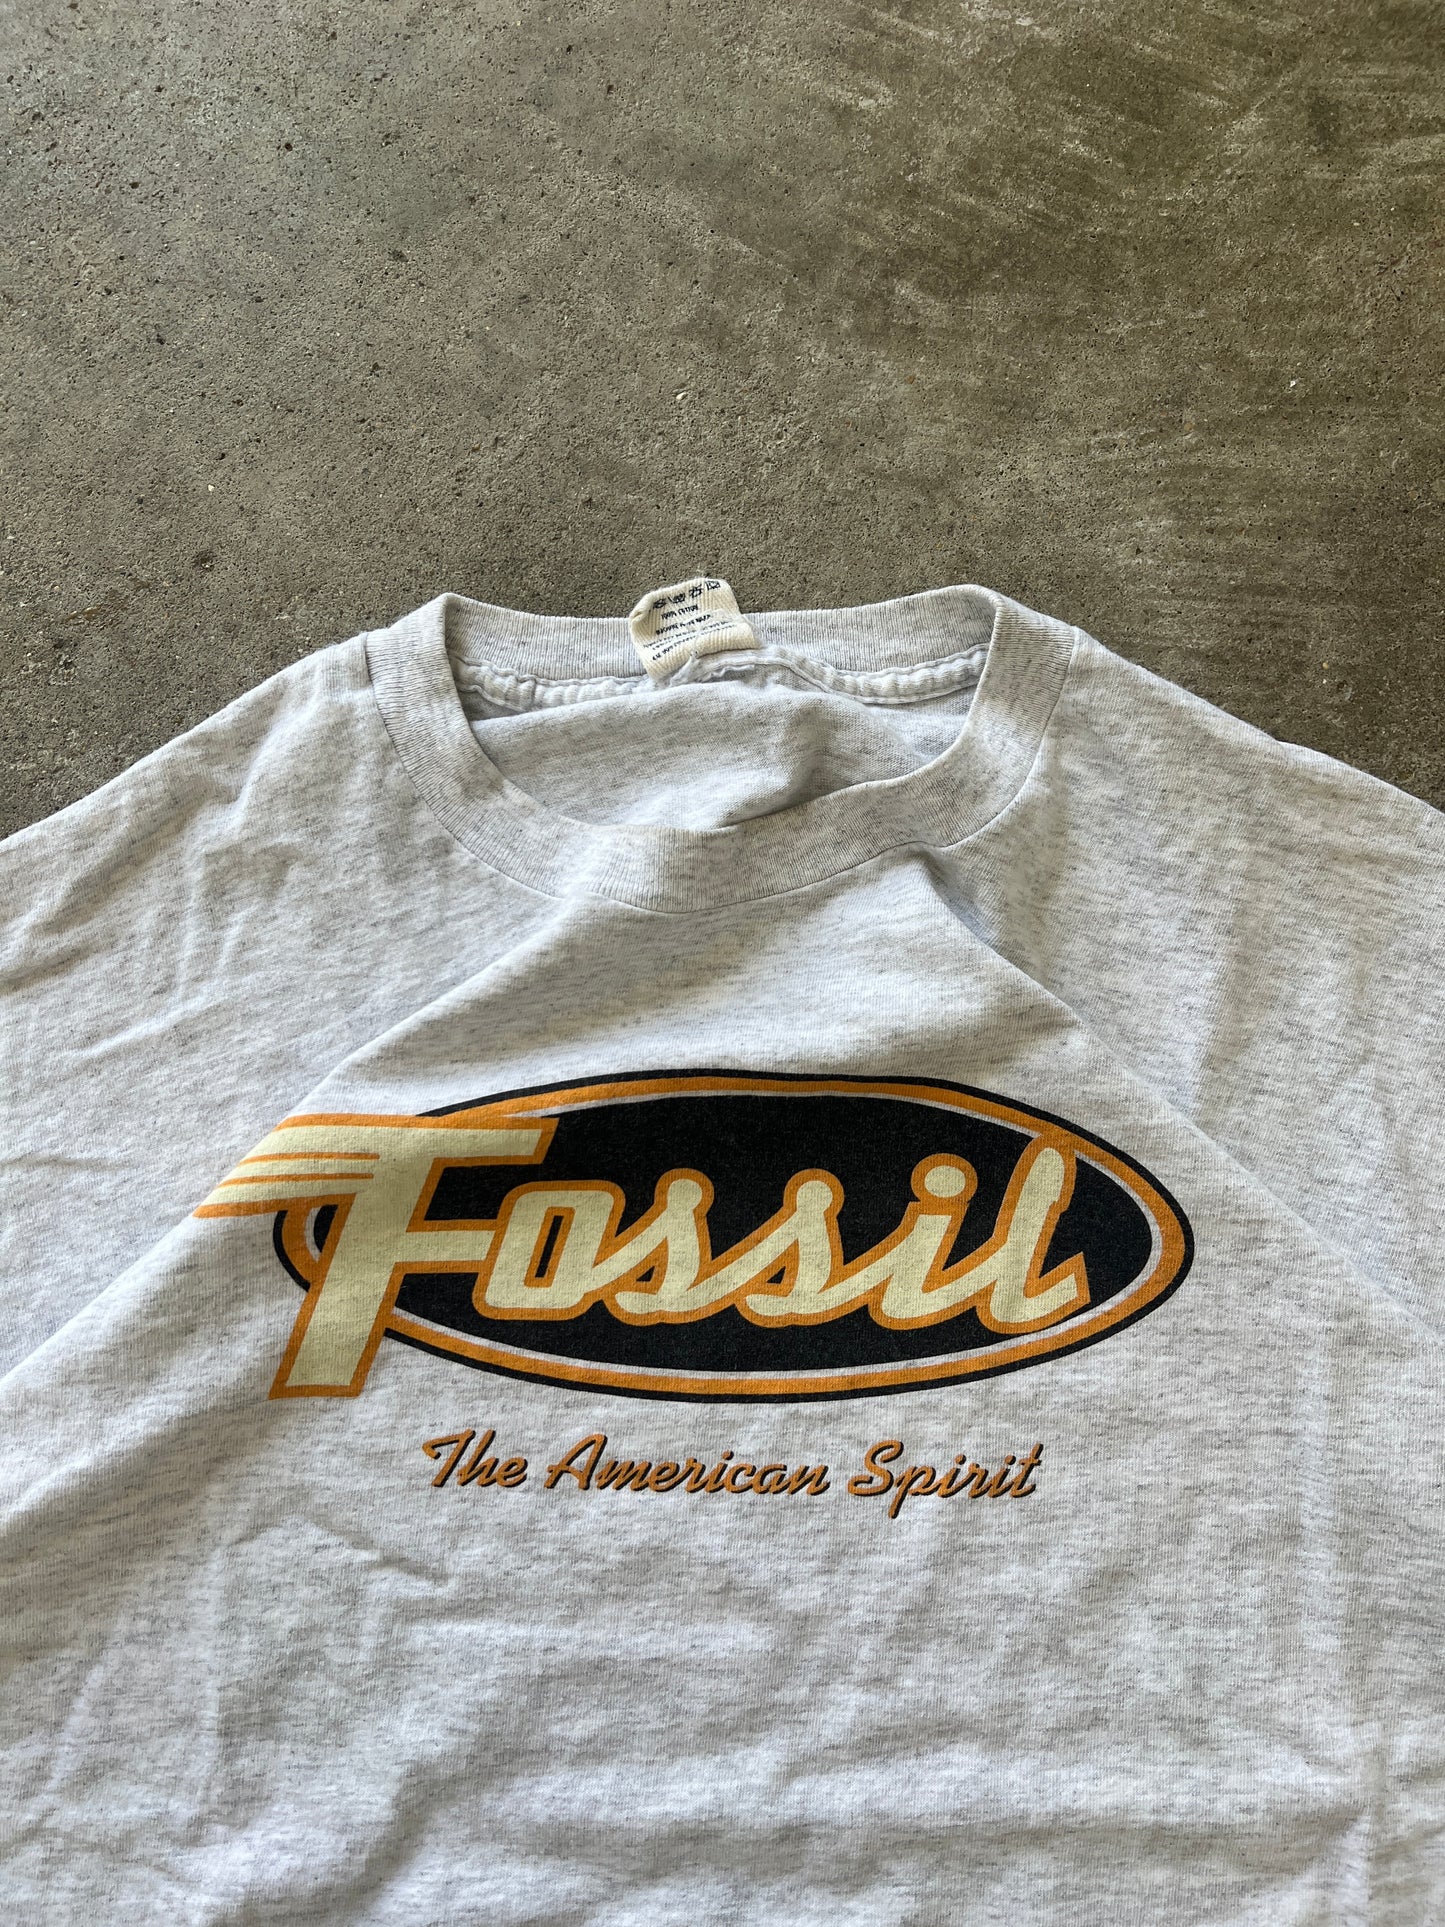 Vintage Fossil Shirt - XL